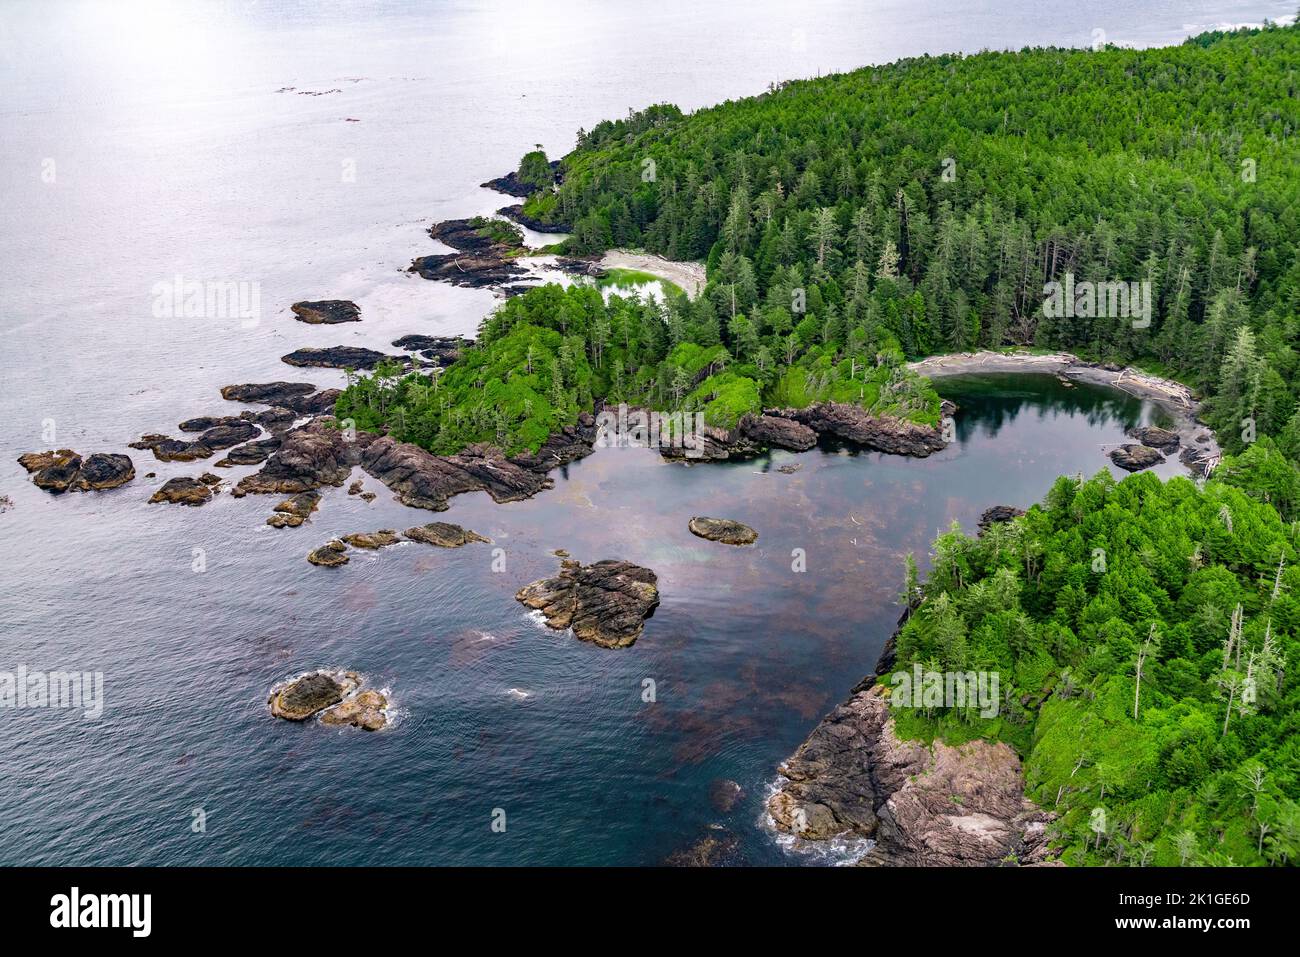 Aerial image of Tofino coastline, British Columbia, Canada Stock Photo